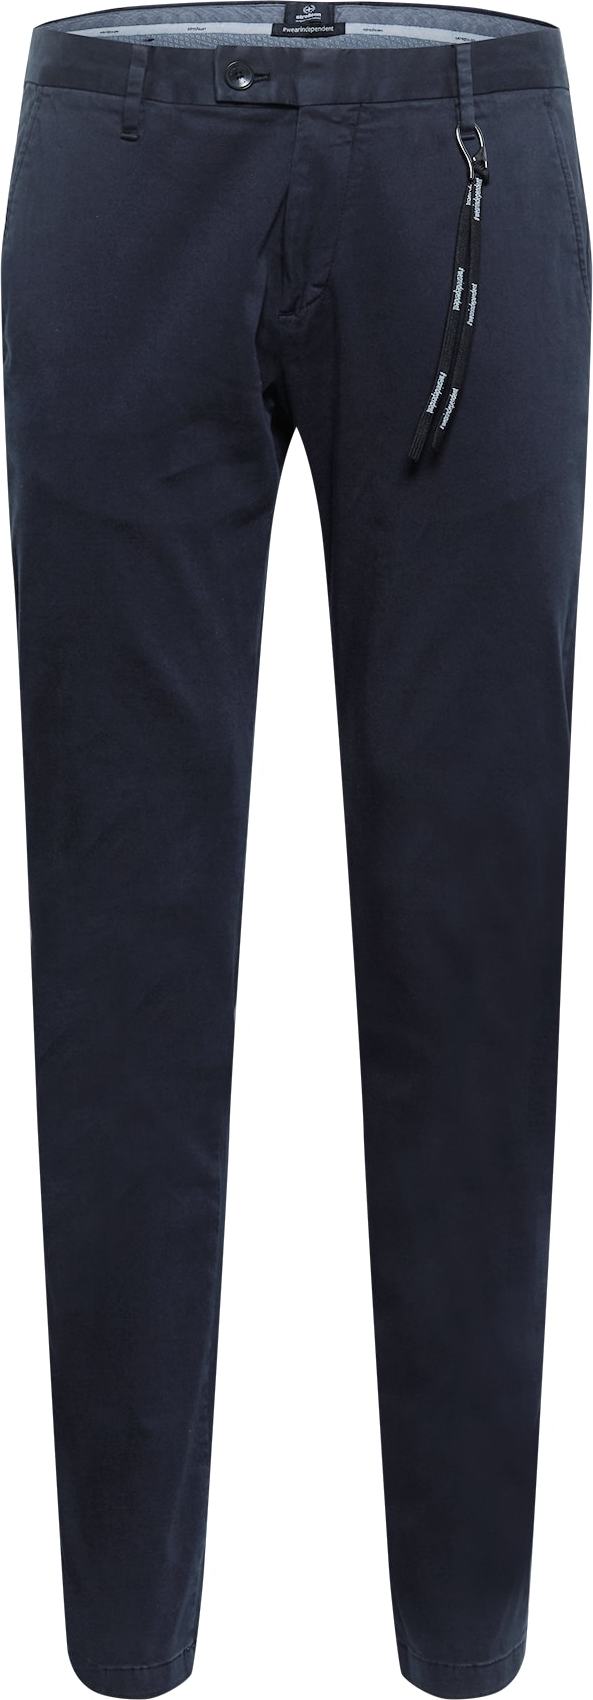 STRELLSON Chino kalhoty 'Code' námořnická modř